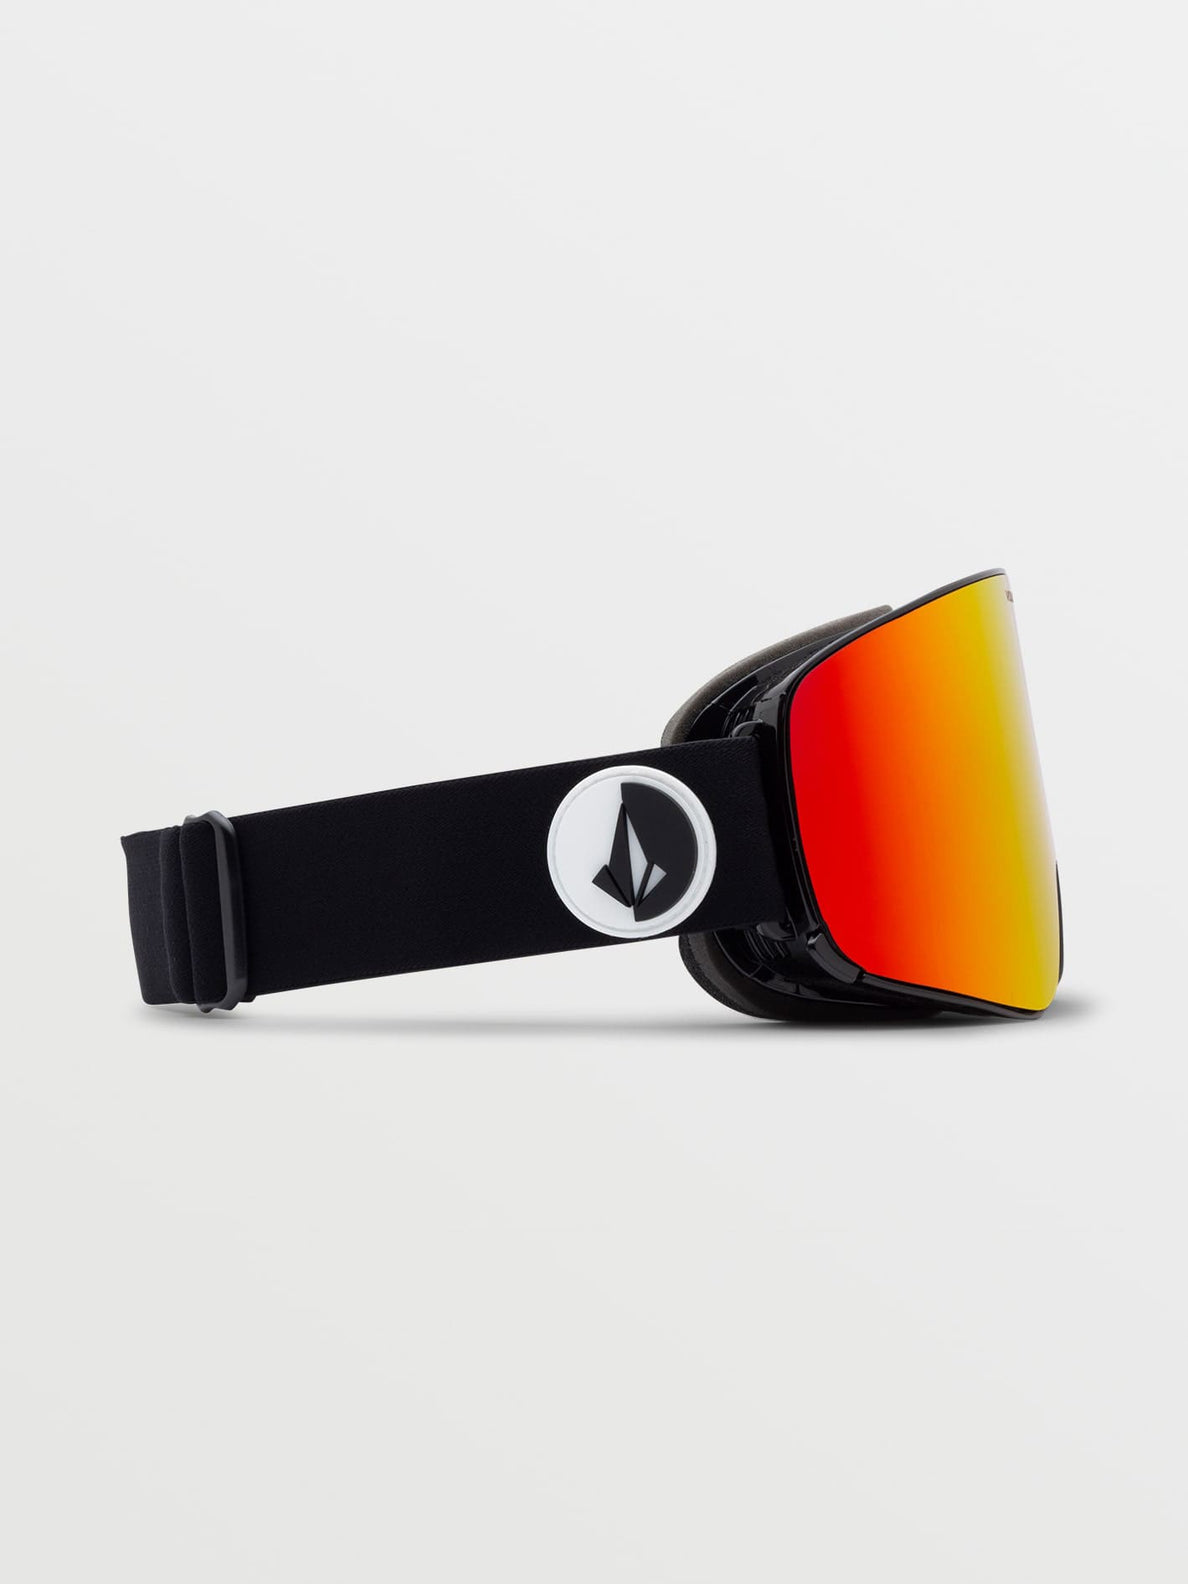 Odyssey Goggle with Bonus Lens - Gloss Black / Red Chrome